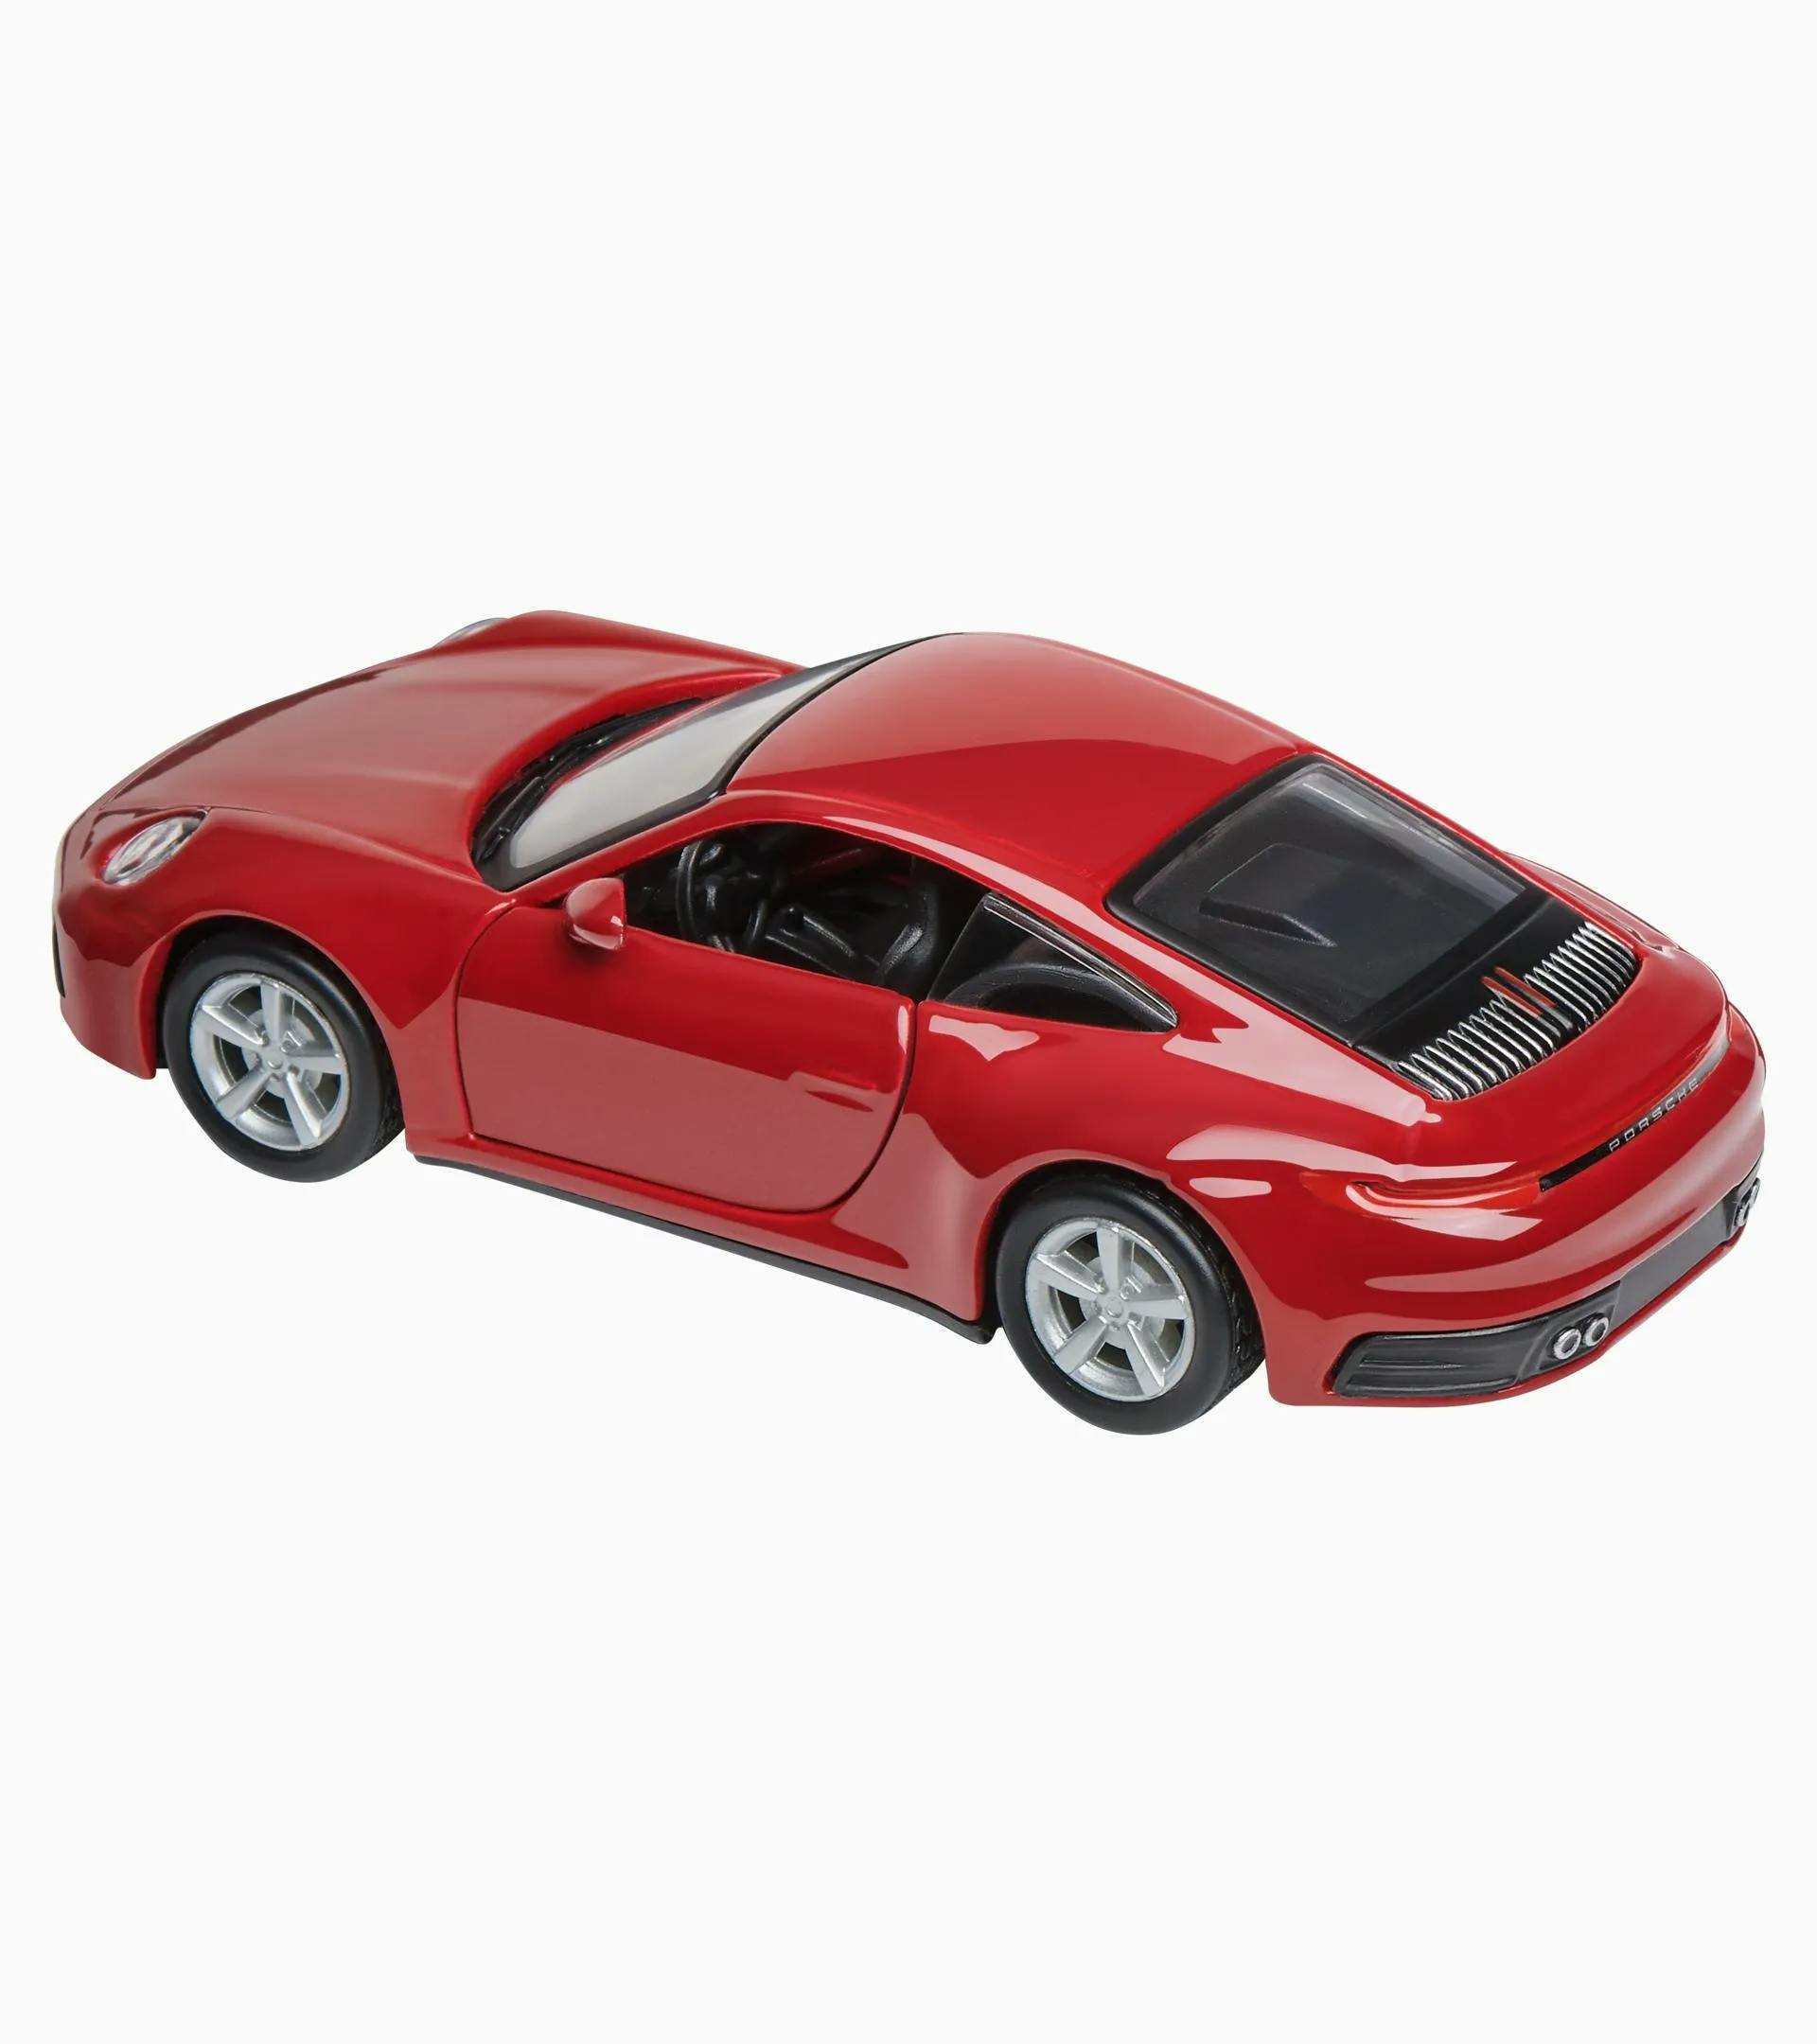 Porsche 911 Carrera cuddy toy red Porsche Design WAP0400020A